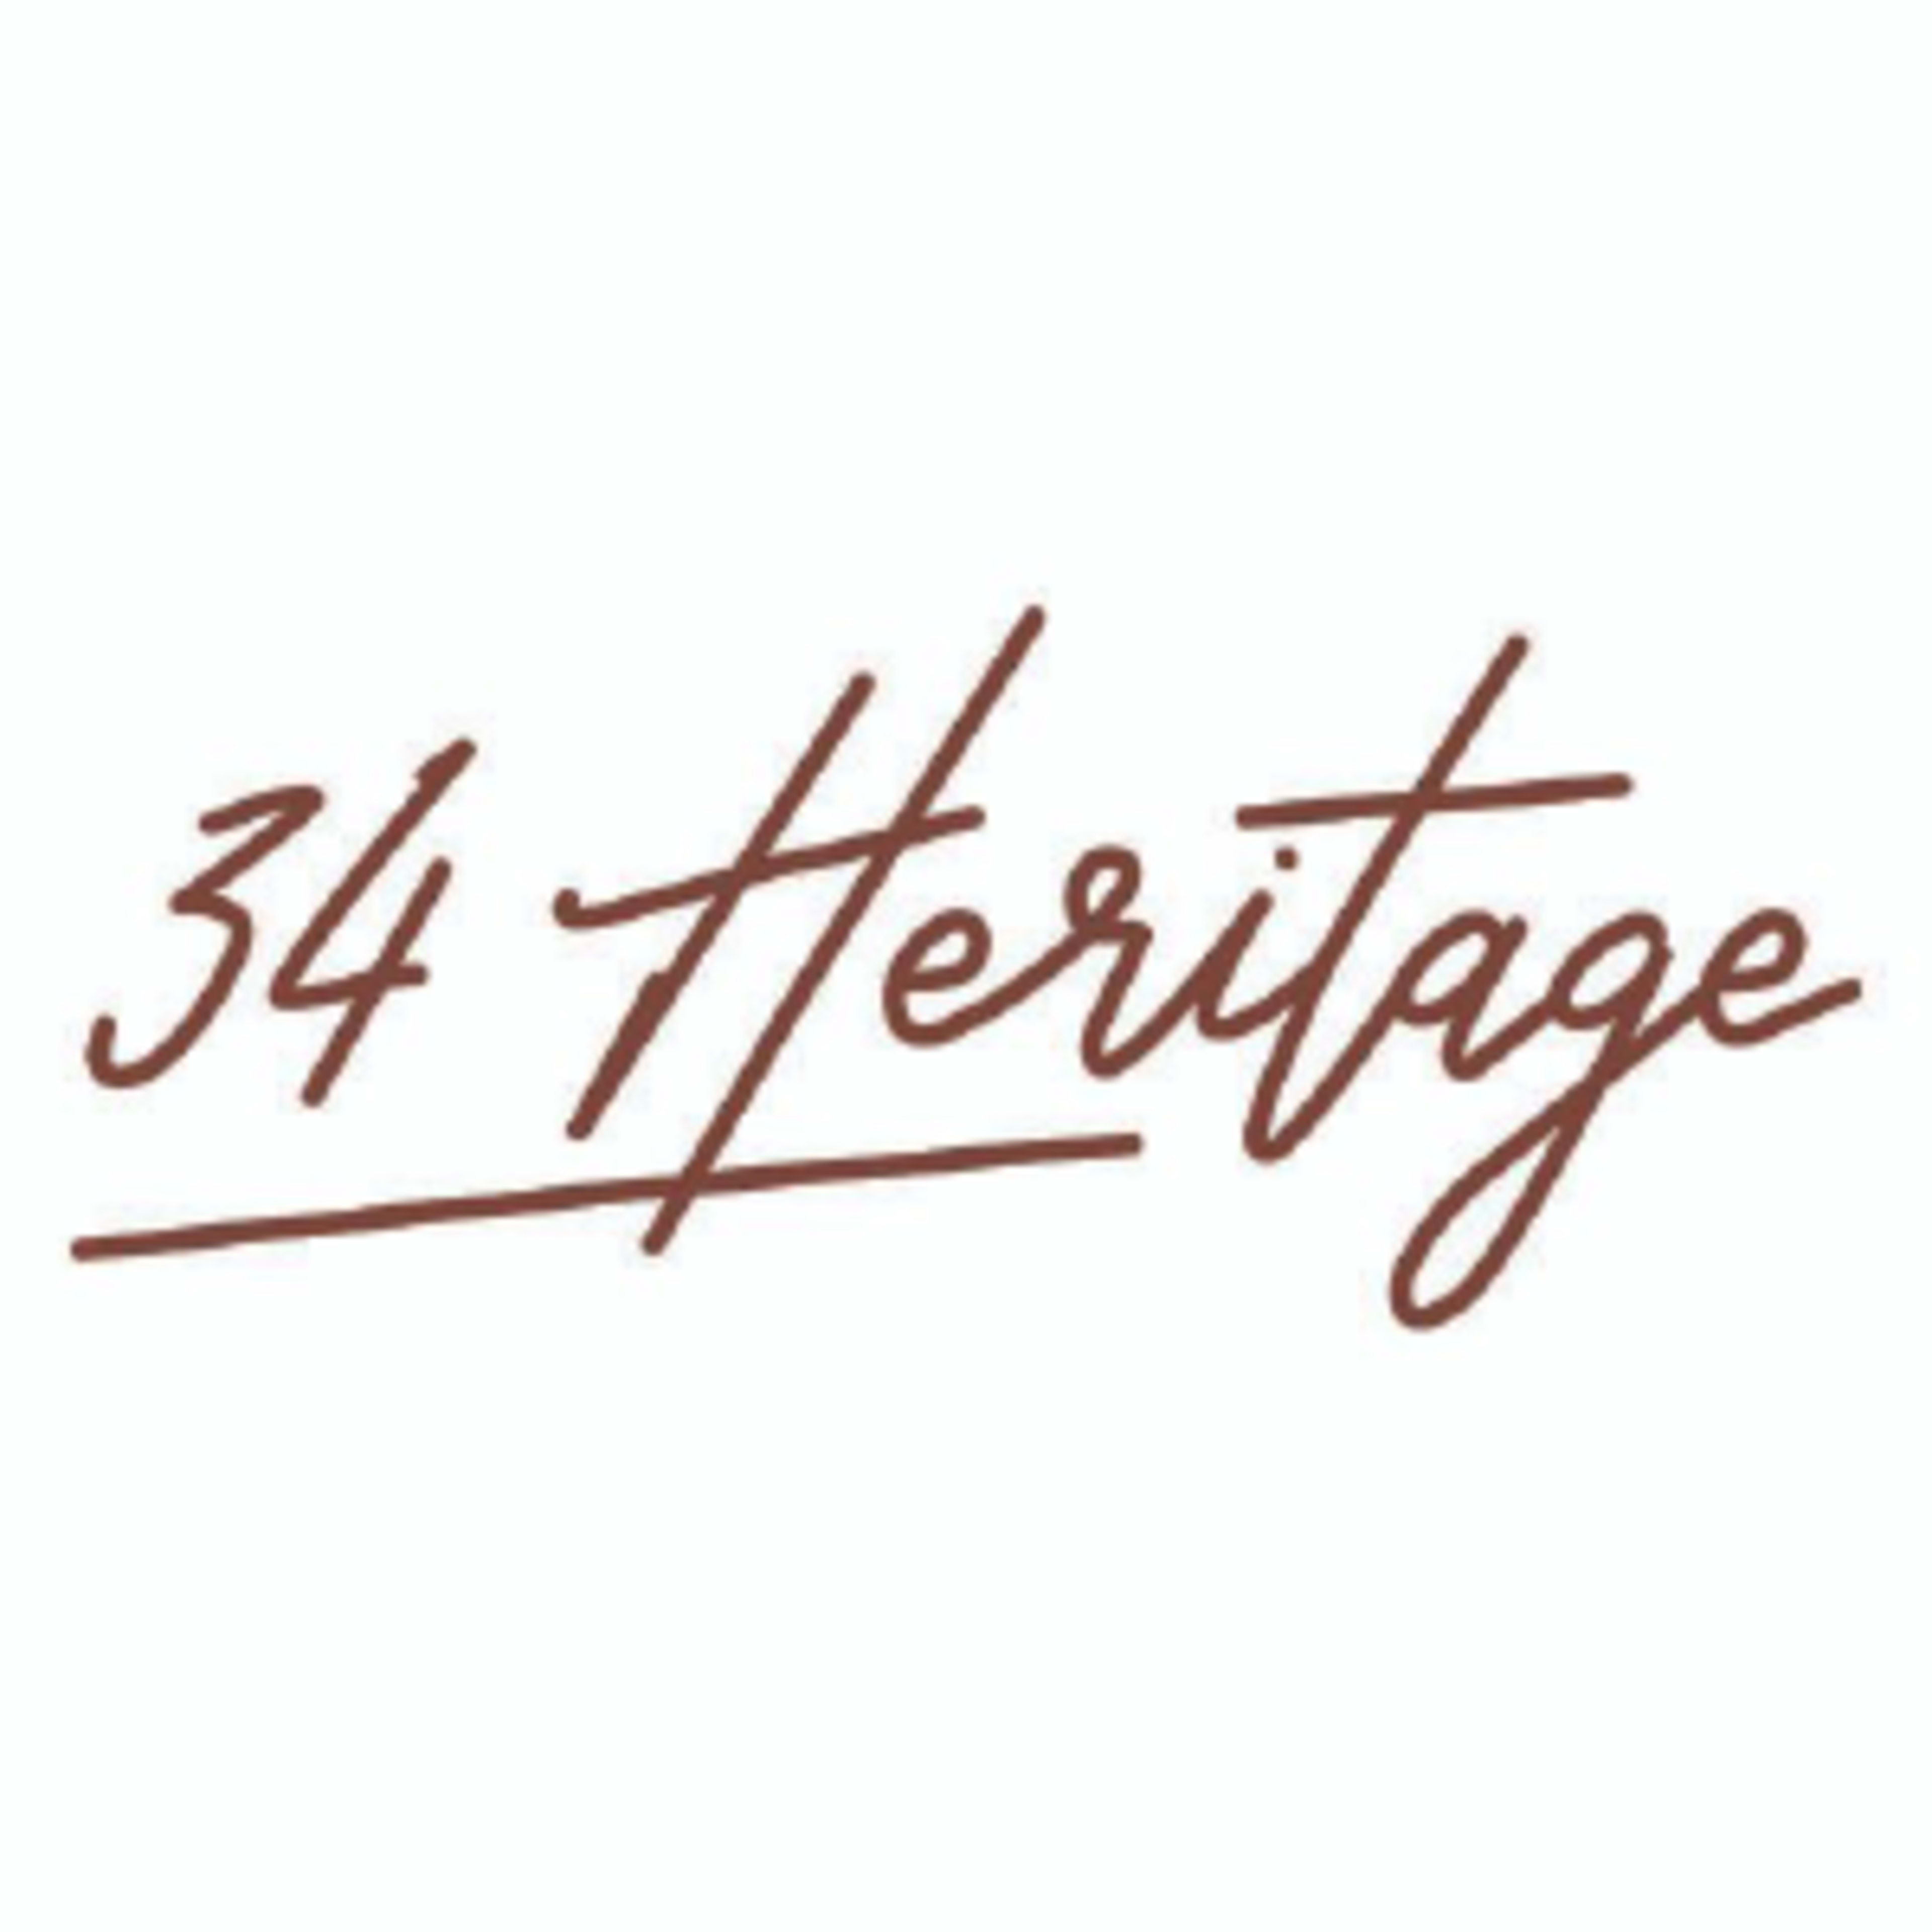 34Heritage Code